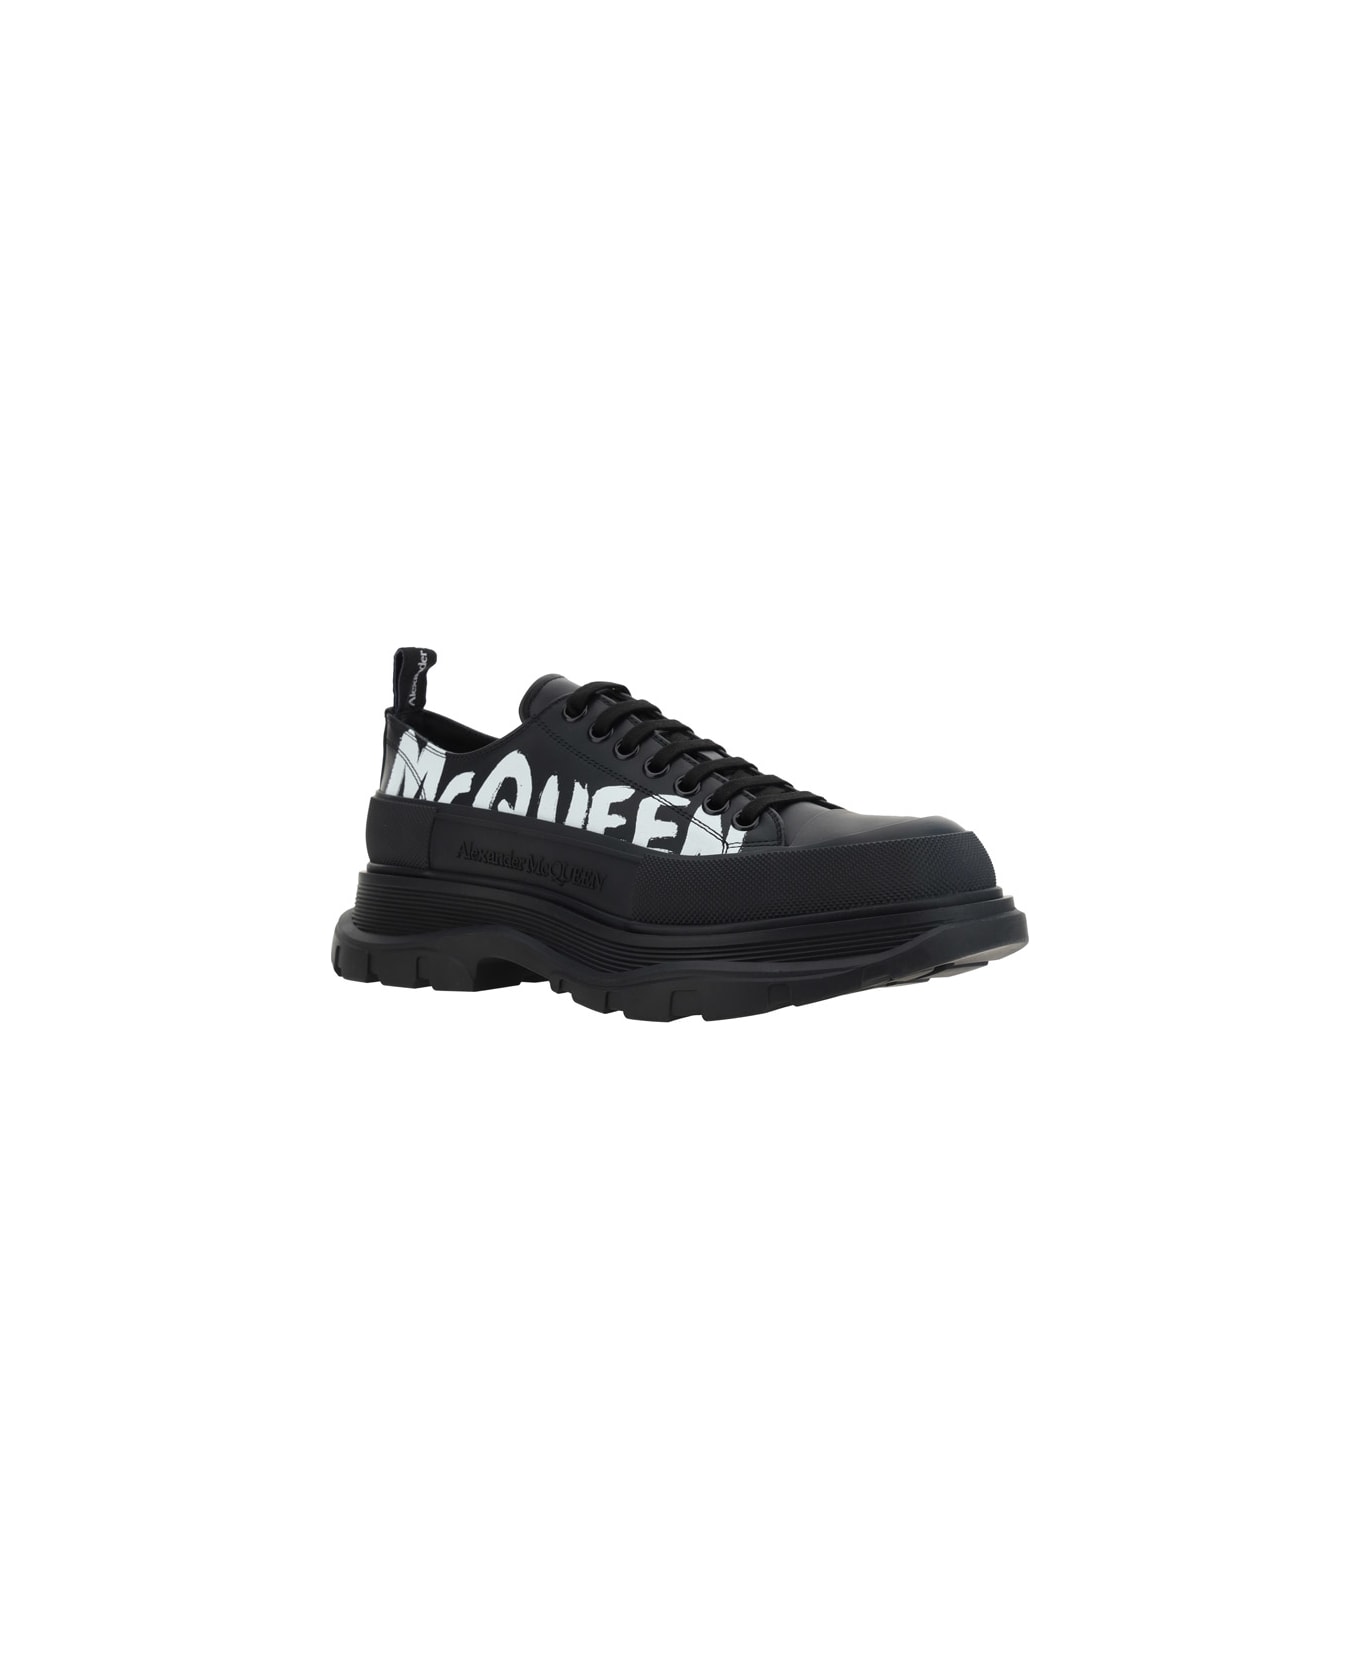 Alexander McQueen Tread Slick Sneakers - Black/white スニーカー